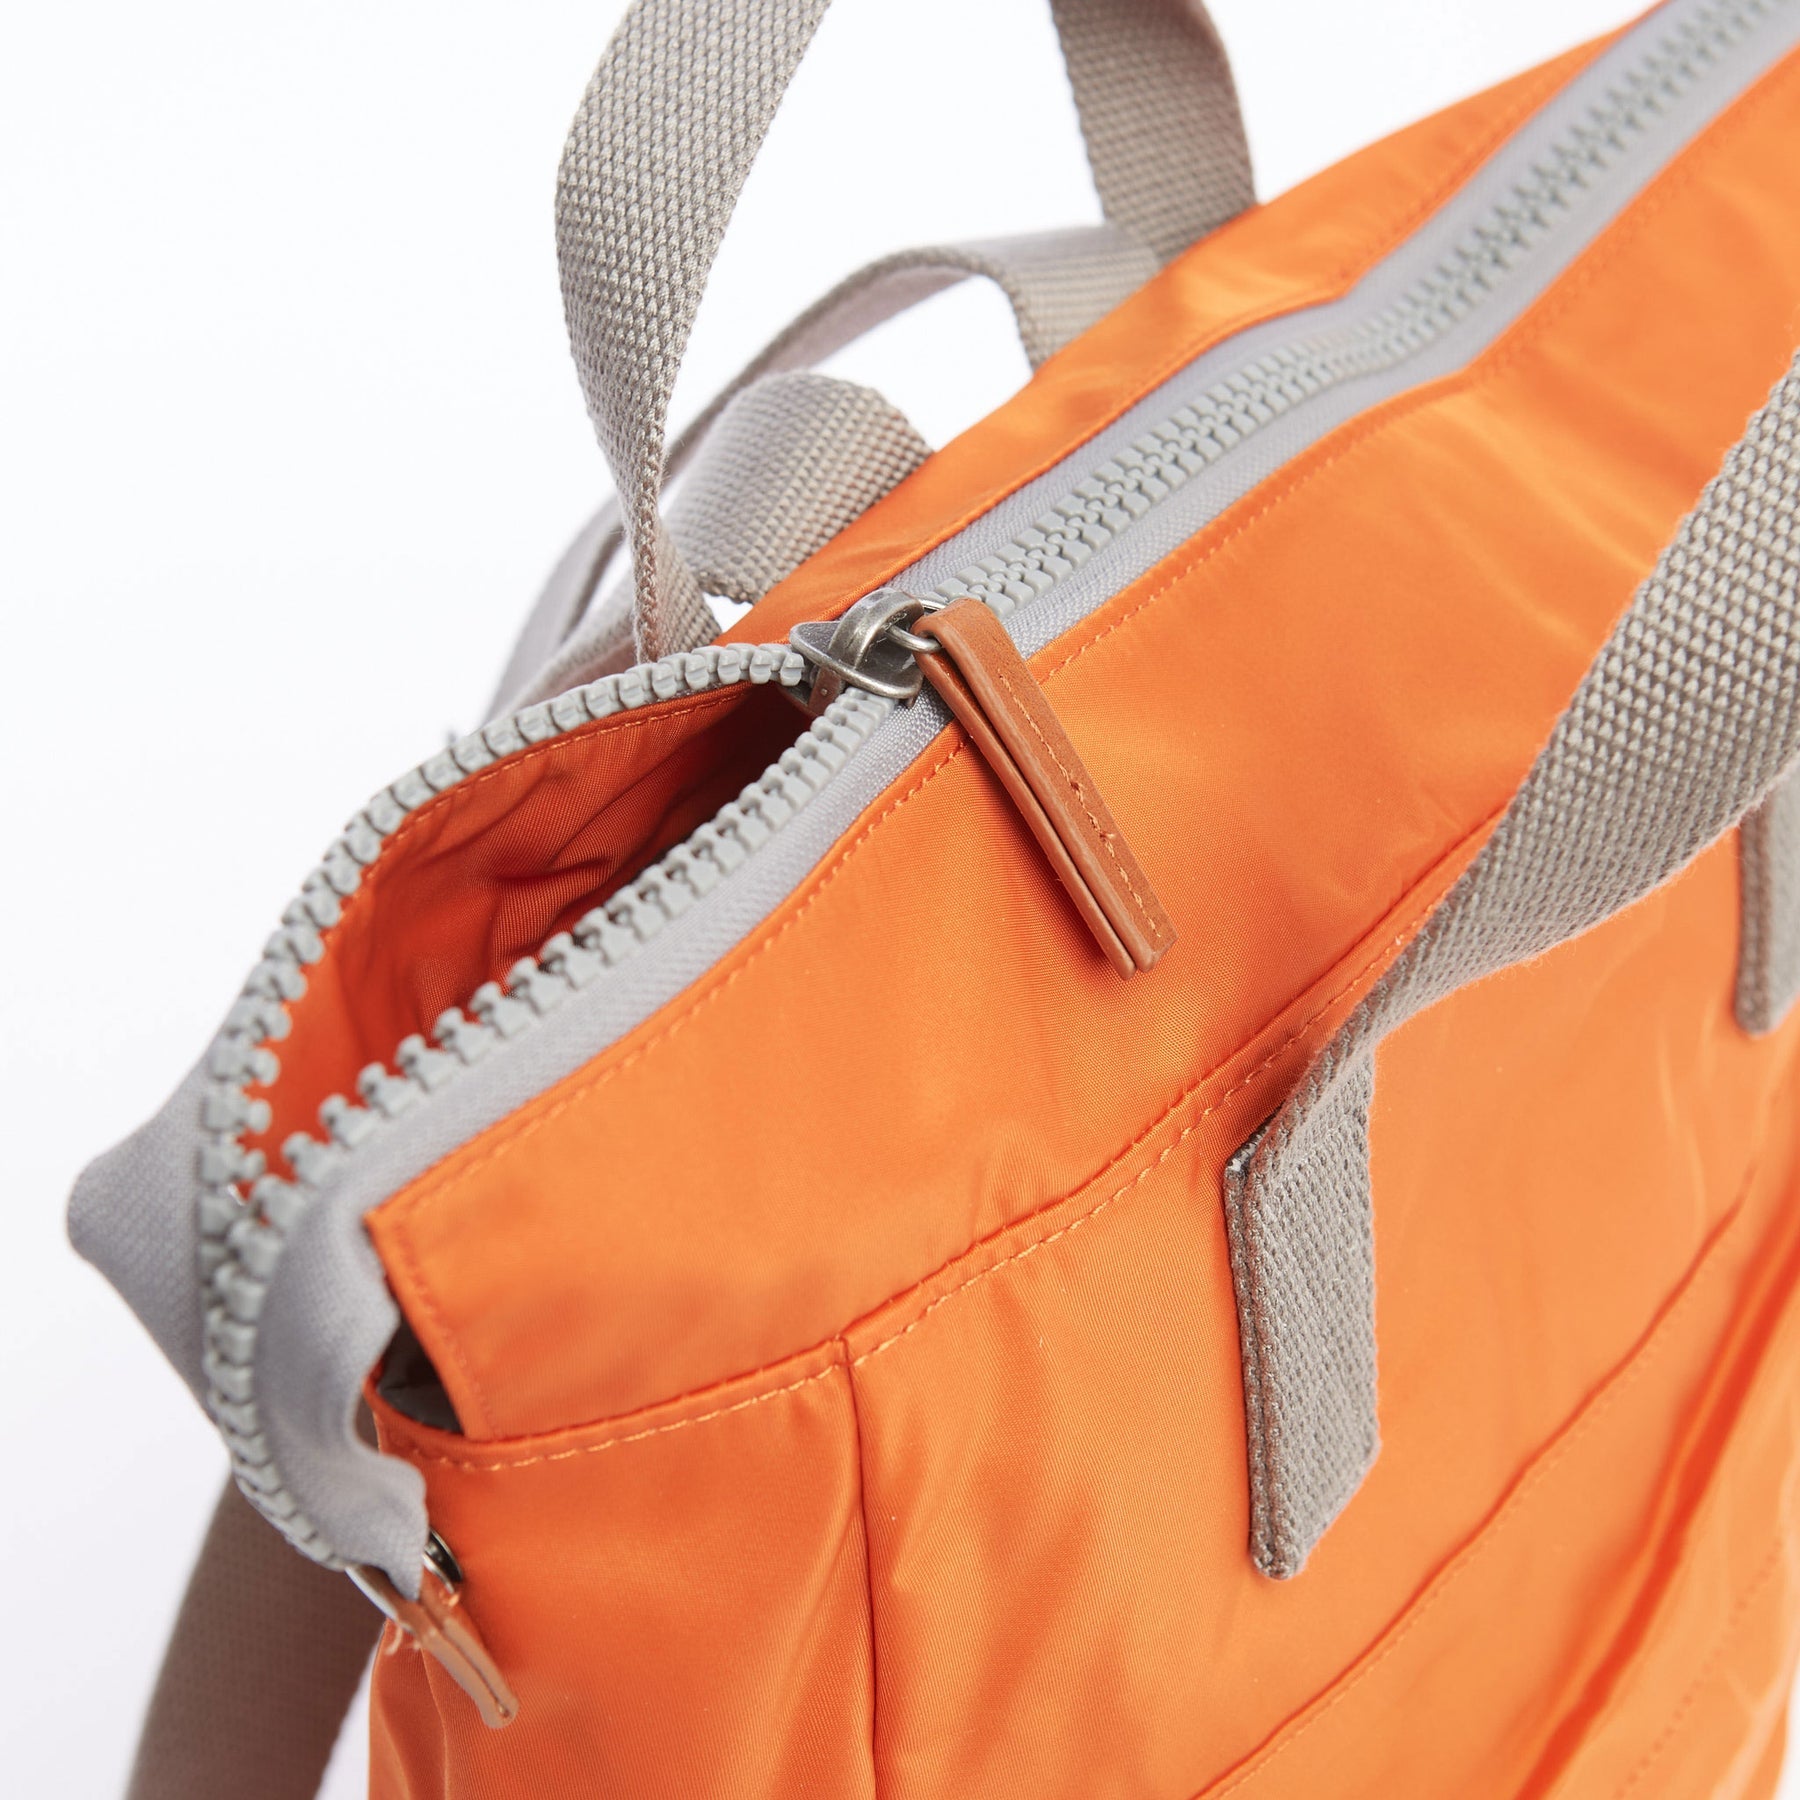 ROKA Bantry B Burnt Orange Medium Recycled Nylon Bag - OS